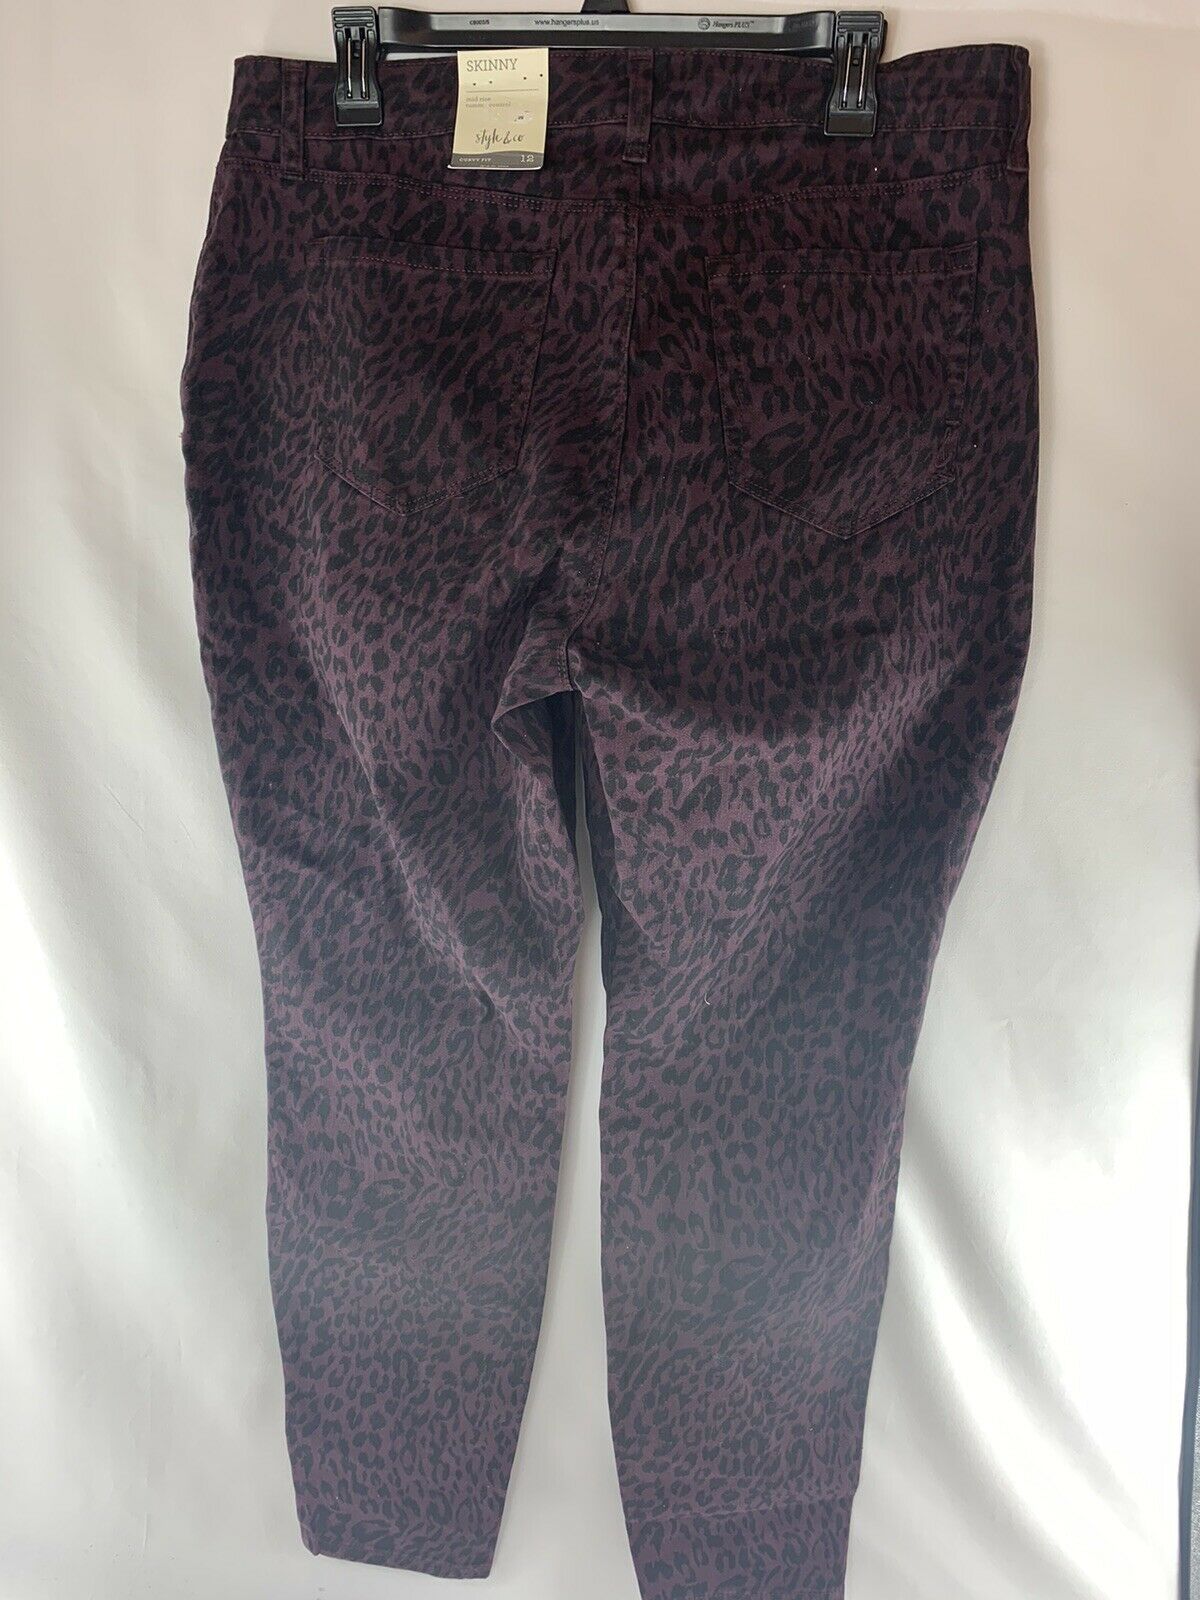 Style & Co Curvy Skinny Leg BJ Wild Puma Jeans Size 12 ($49)